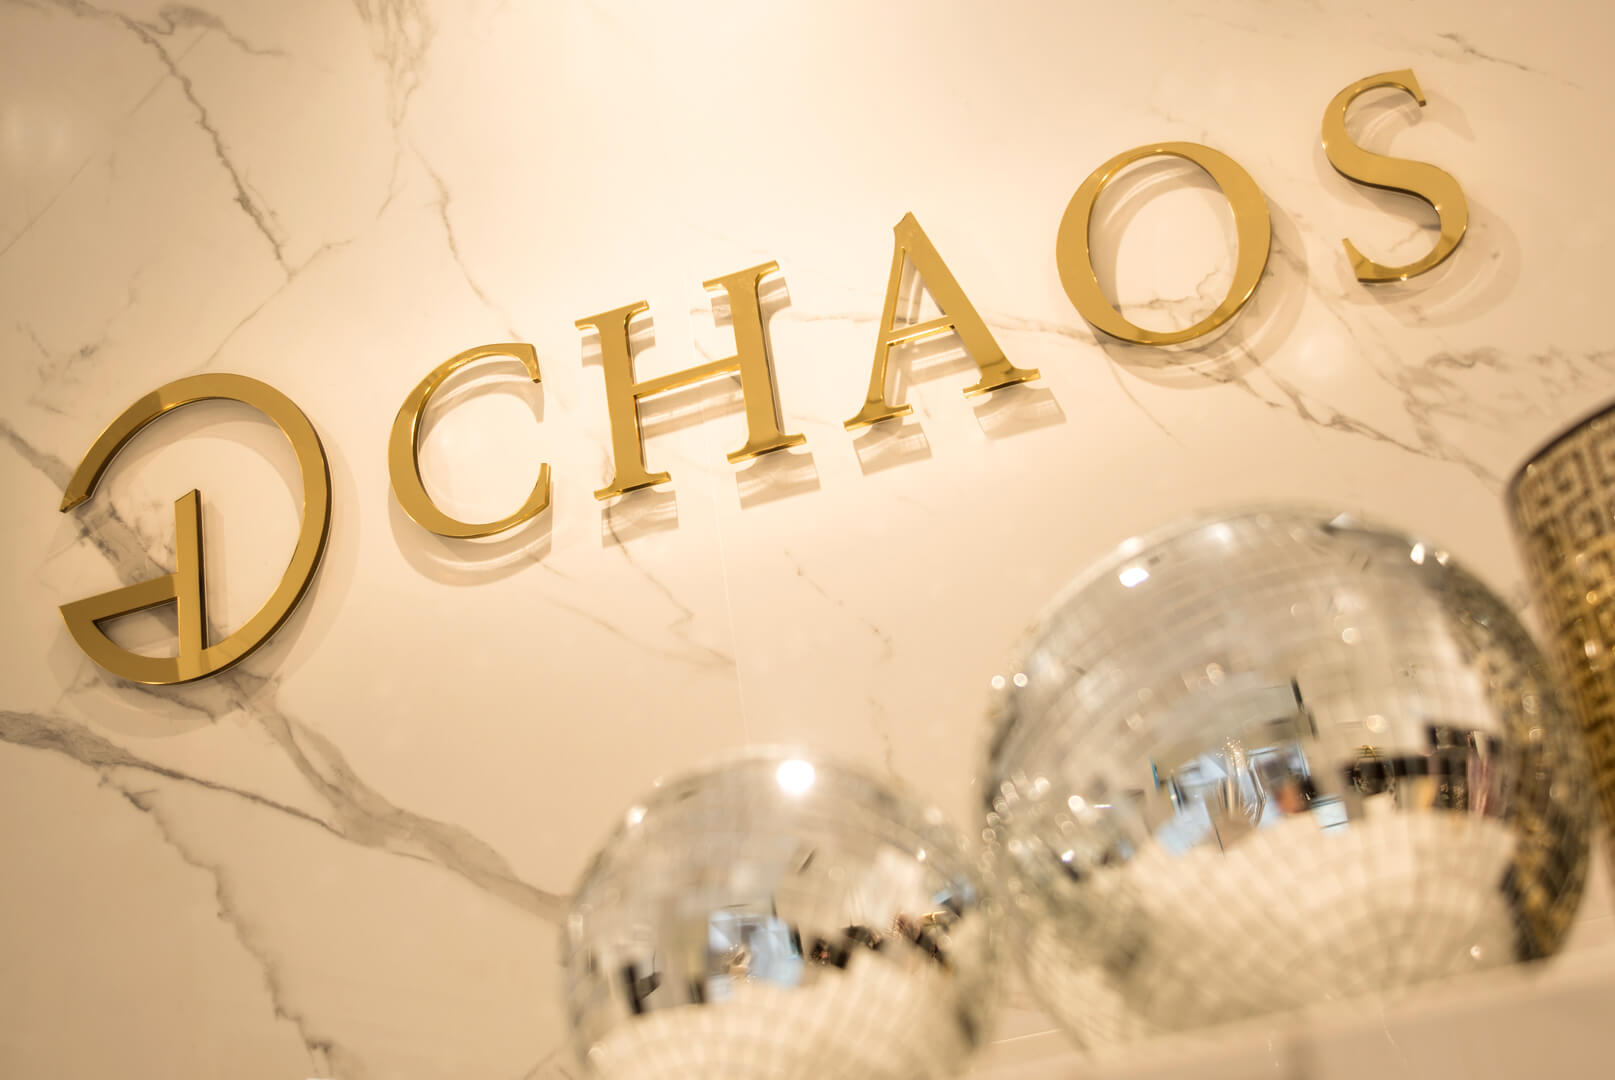 CHAOS - Chaos - goldenes Logo und 3D-Blockbuchstaben aus Plexiglas an der Wand